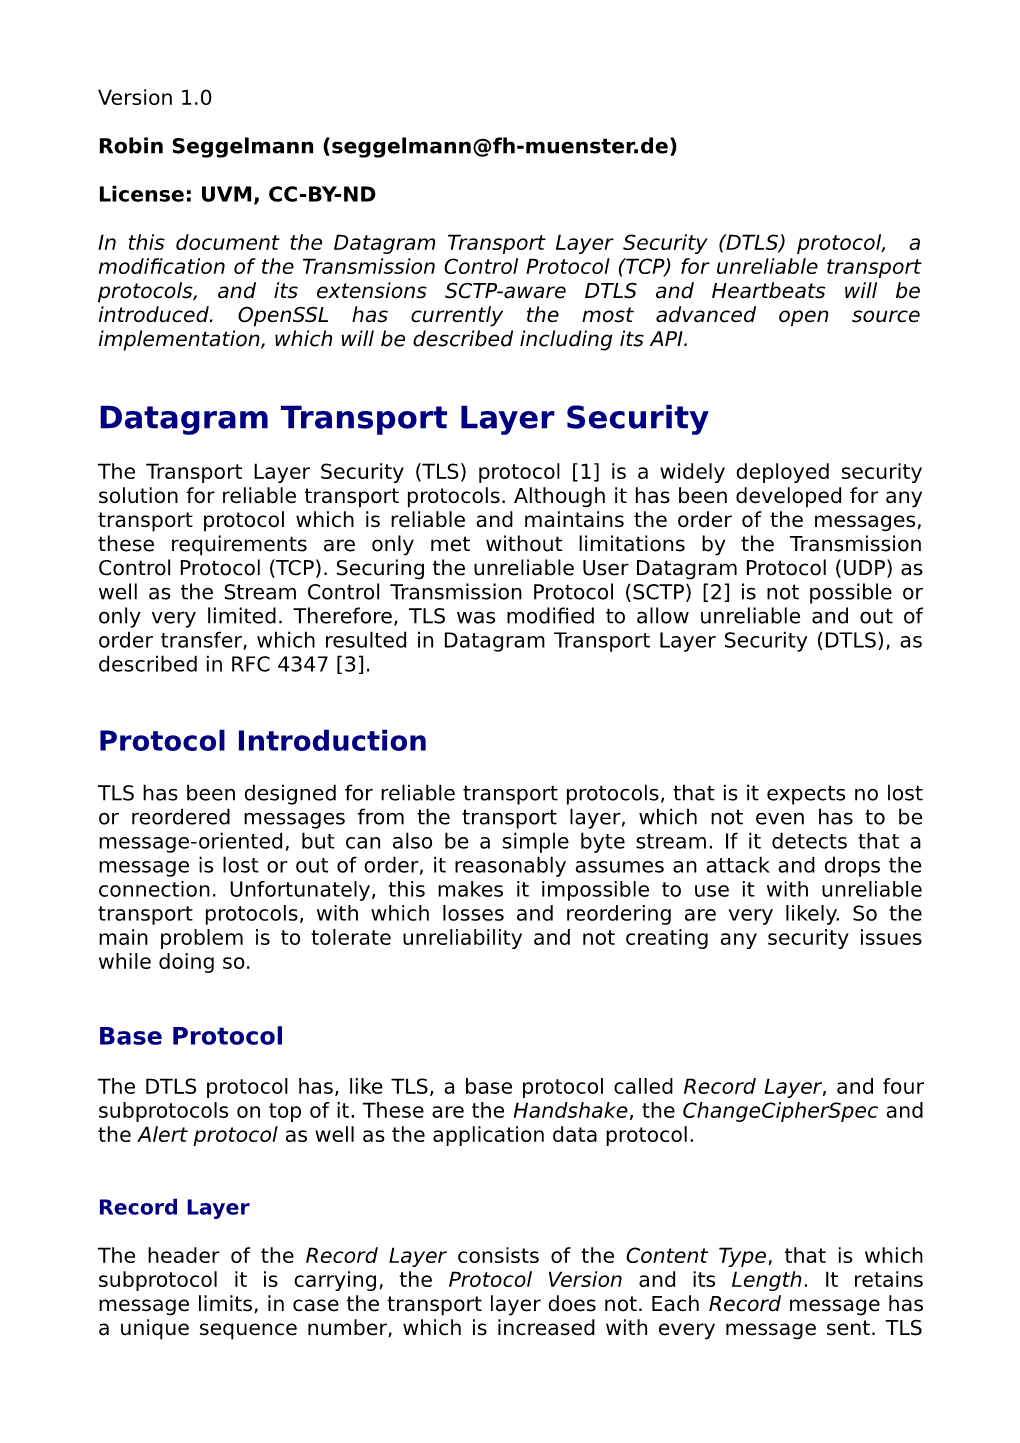 Datagram Transport Layer Security